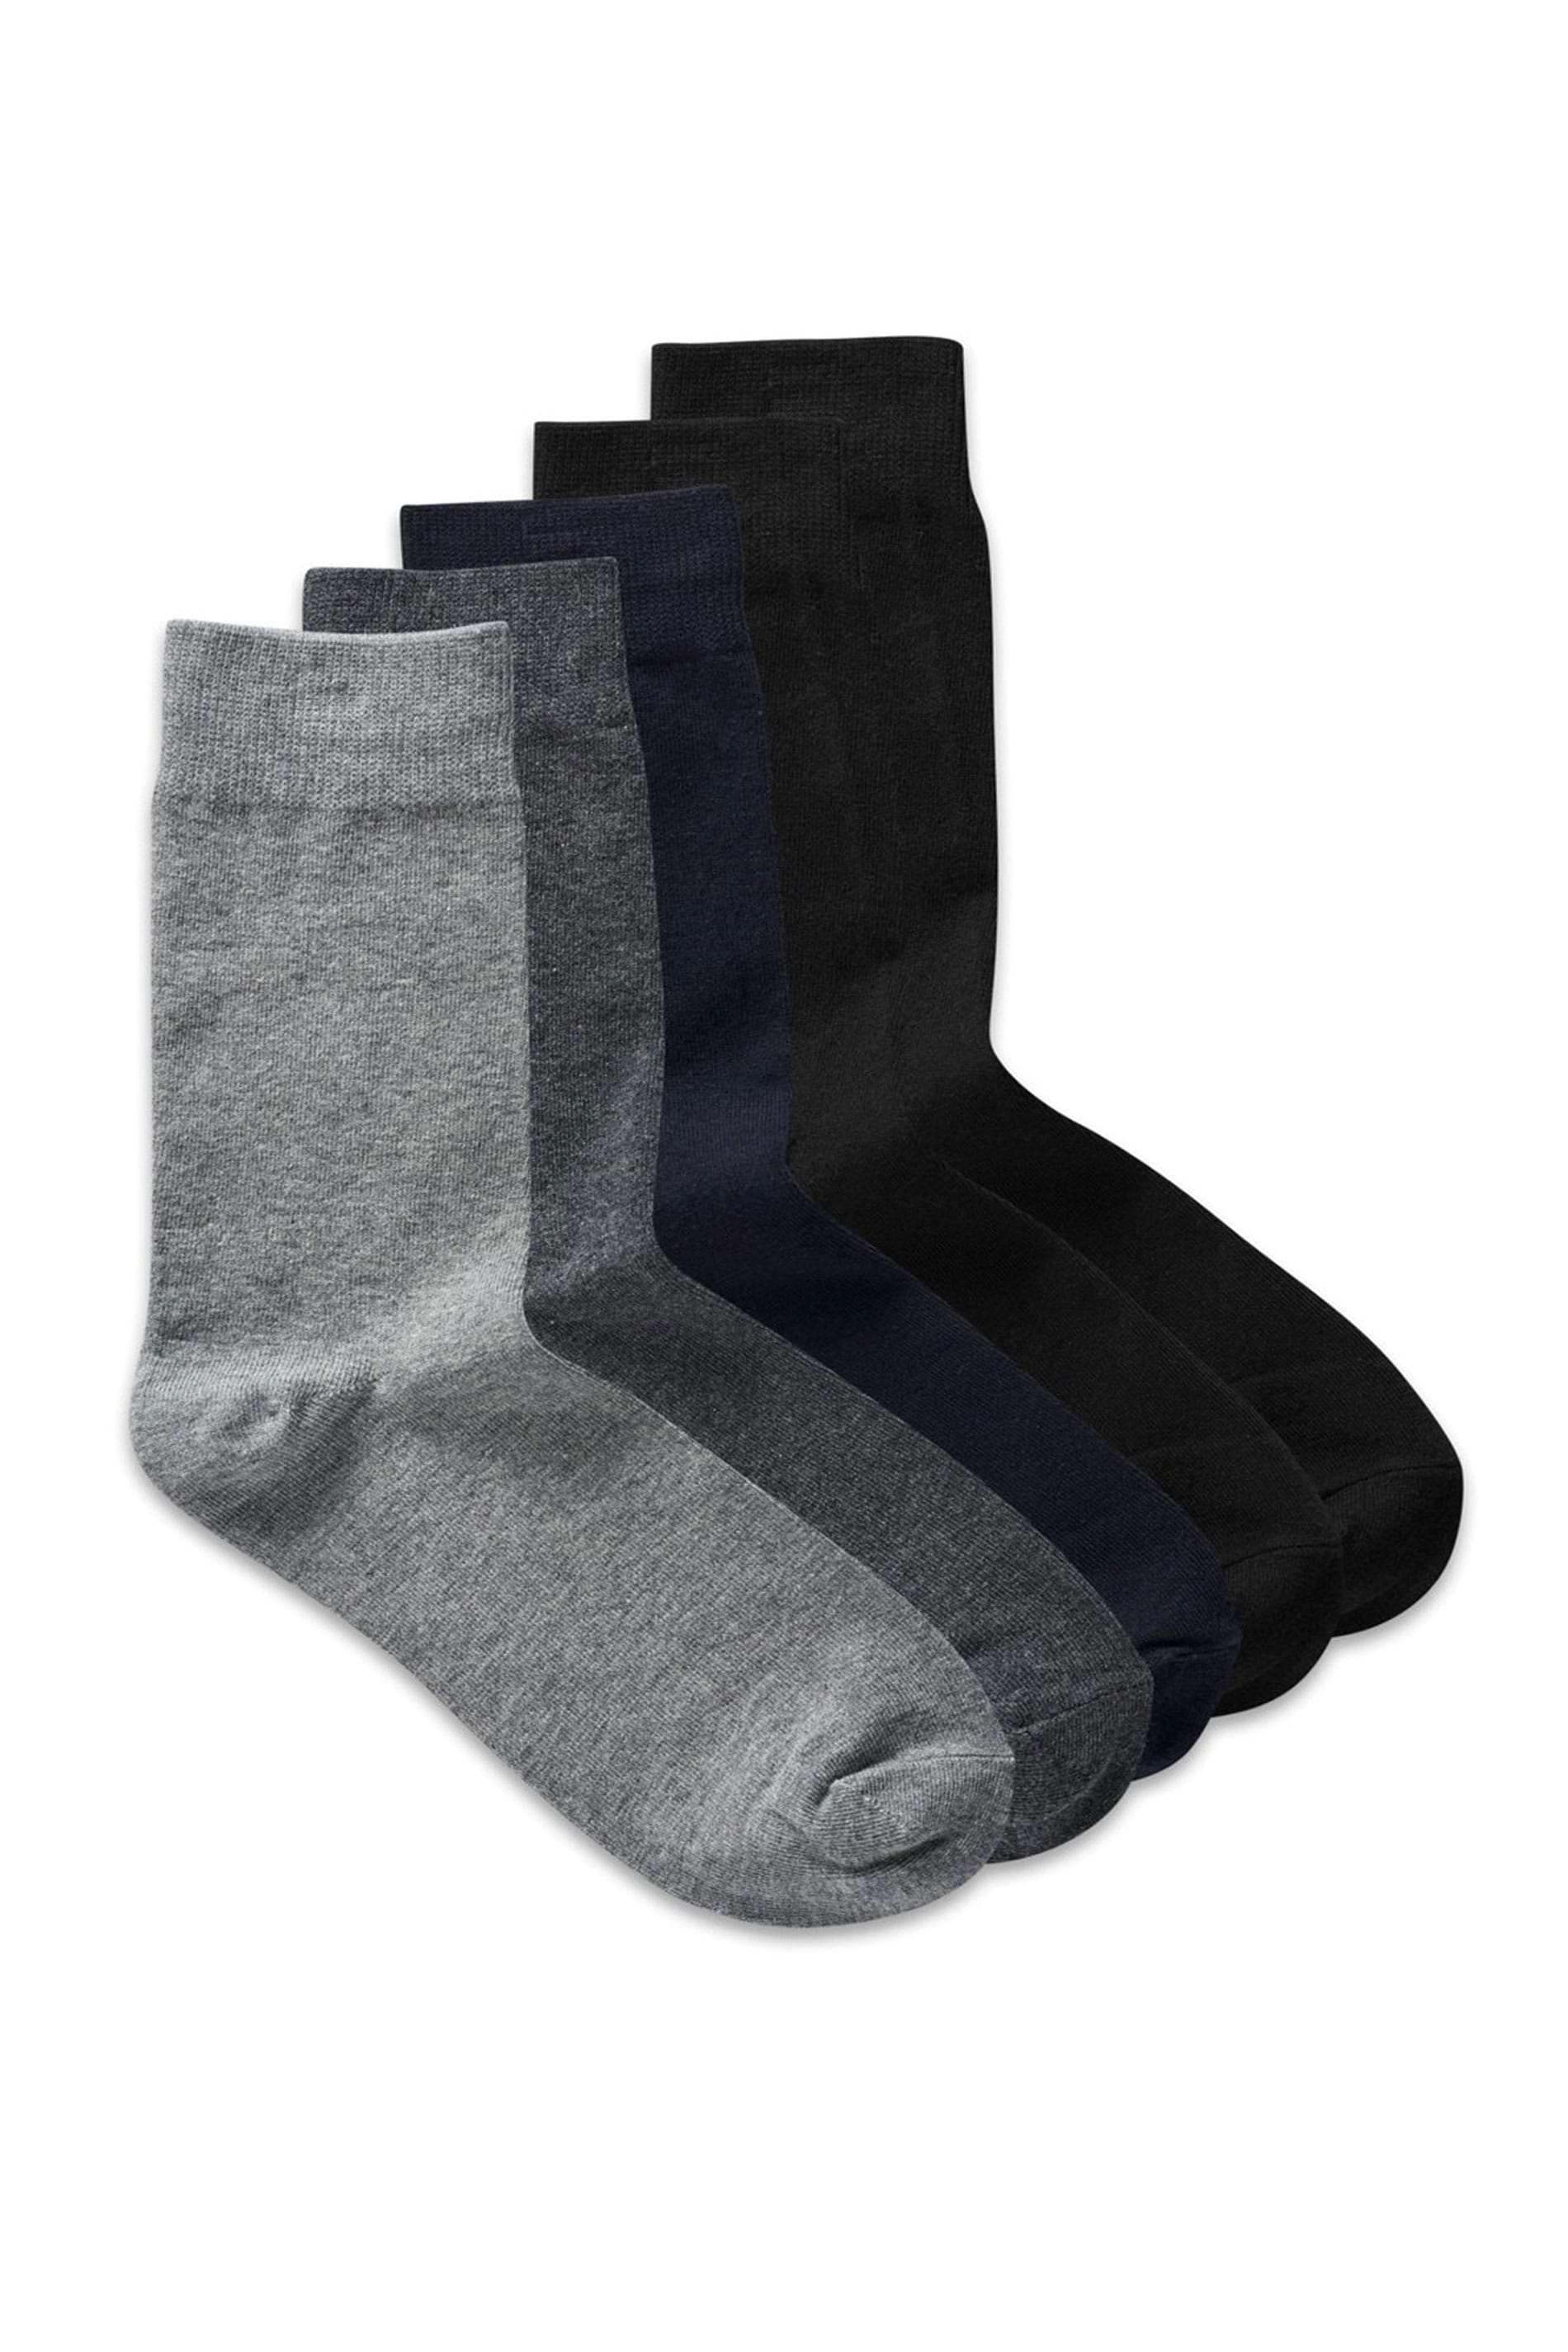 JACK & JONES 5 PACK Multi Ankle Socks | BadRhino 1